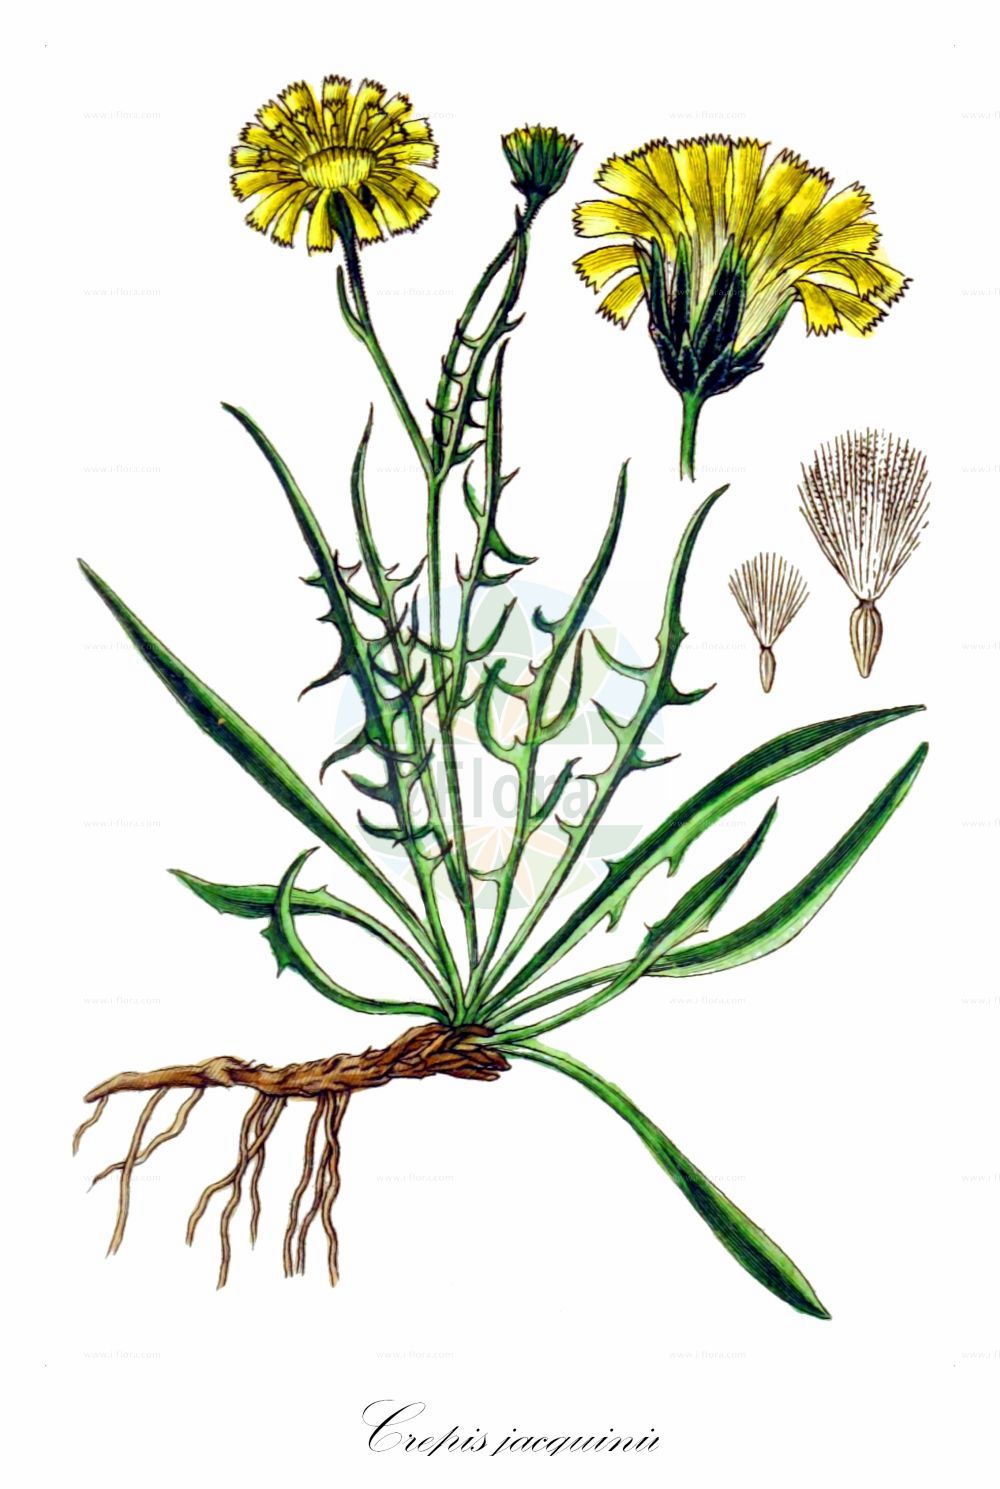 Historische Abbildung von Crepis jacquinii (Felsen-Pippau - Rock Hawk's-beard). Das Bild zeigt Blatt, Bluete, Frucht und Same. ---- Historical Drawing of Crepis jacquinii (Felsen-Pippau - Rock Hawk's-beard). The image is showing leaf, flower, fruit and seed.(Crepis jacquinii,Felsen-Pippau,Rock Hawk's-beard,Crepis jacquinii,Hieracium chondrilloides,Felsen-Pippau,Kerners Pippau,Rock Hawk's-beard,Crepis,Pippau,Hawk's-beard,Asteraceae,Korbblütengewächse,Daisy family,Blatt,Bluete,Frucht,Same,leaf,flower,fruit,seed,Sturm (1796f))